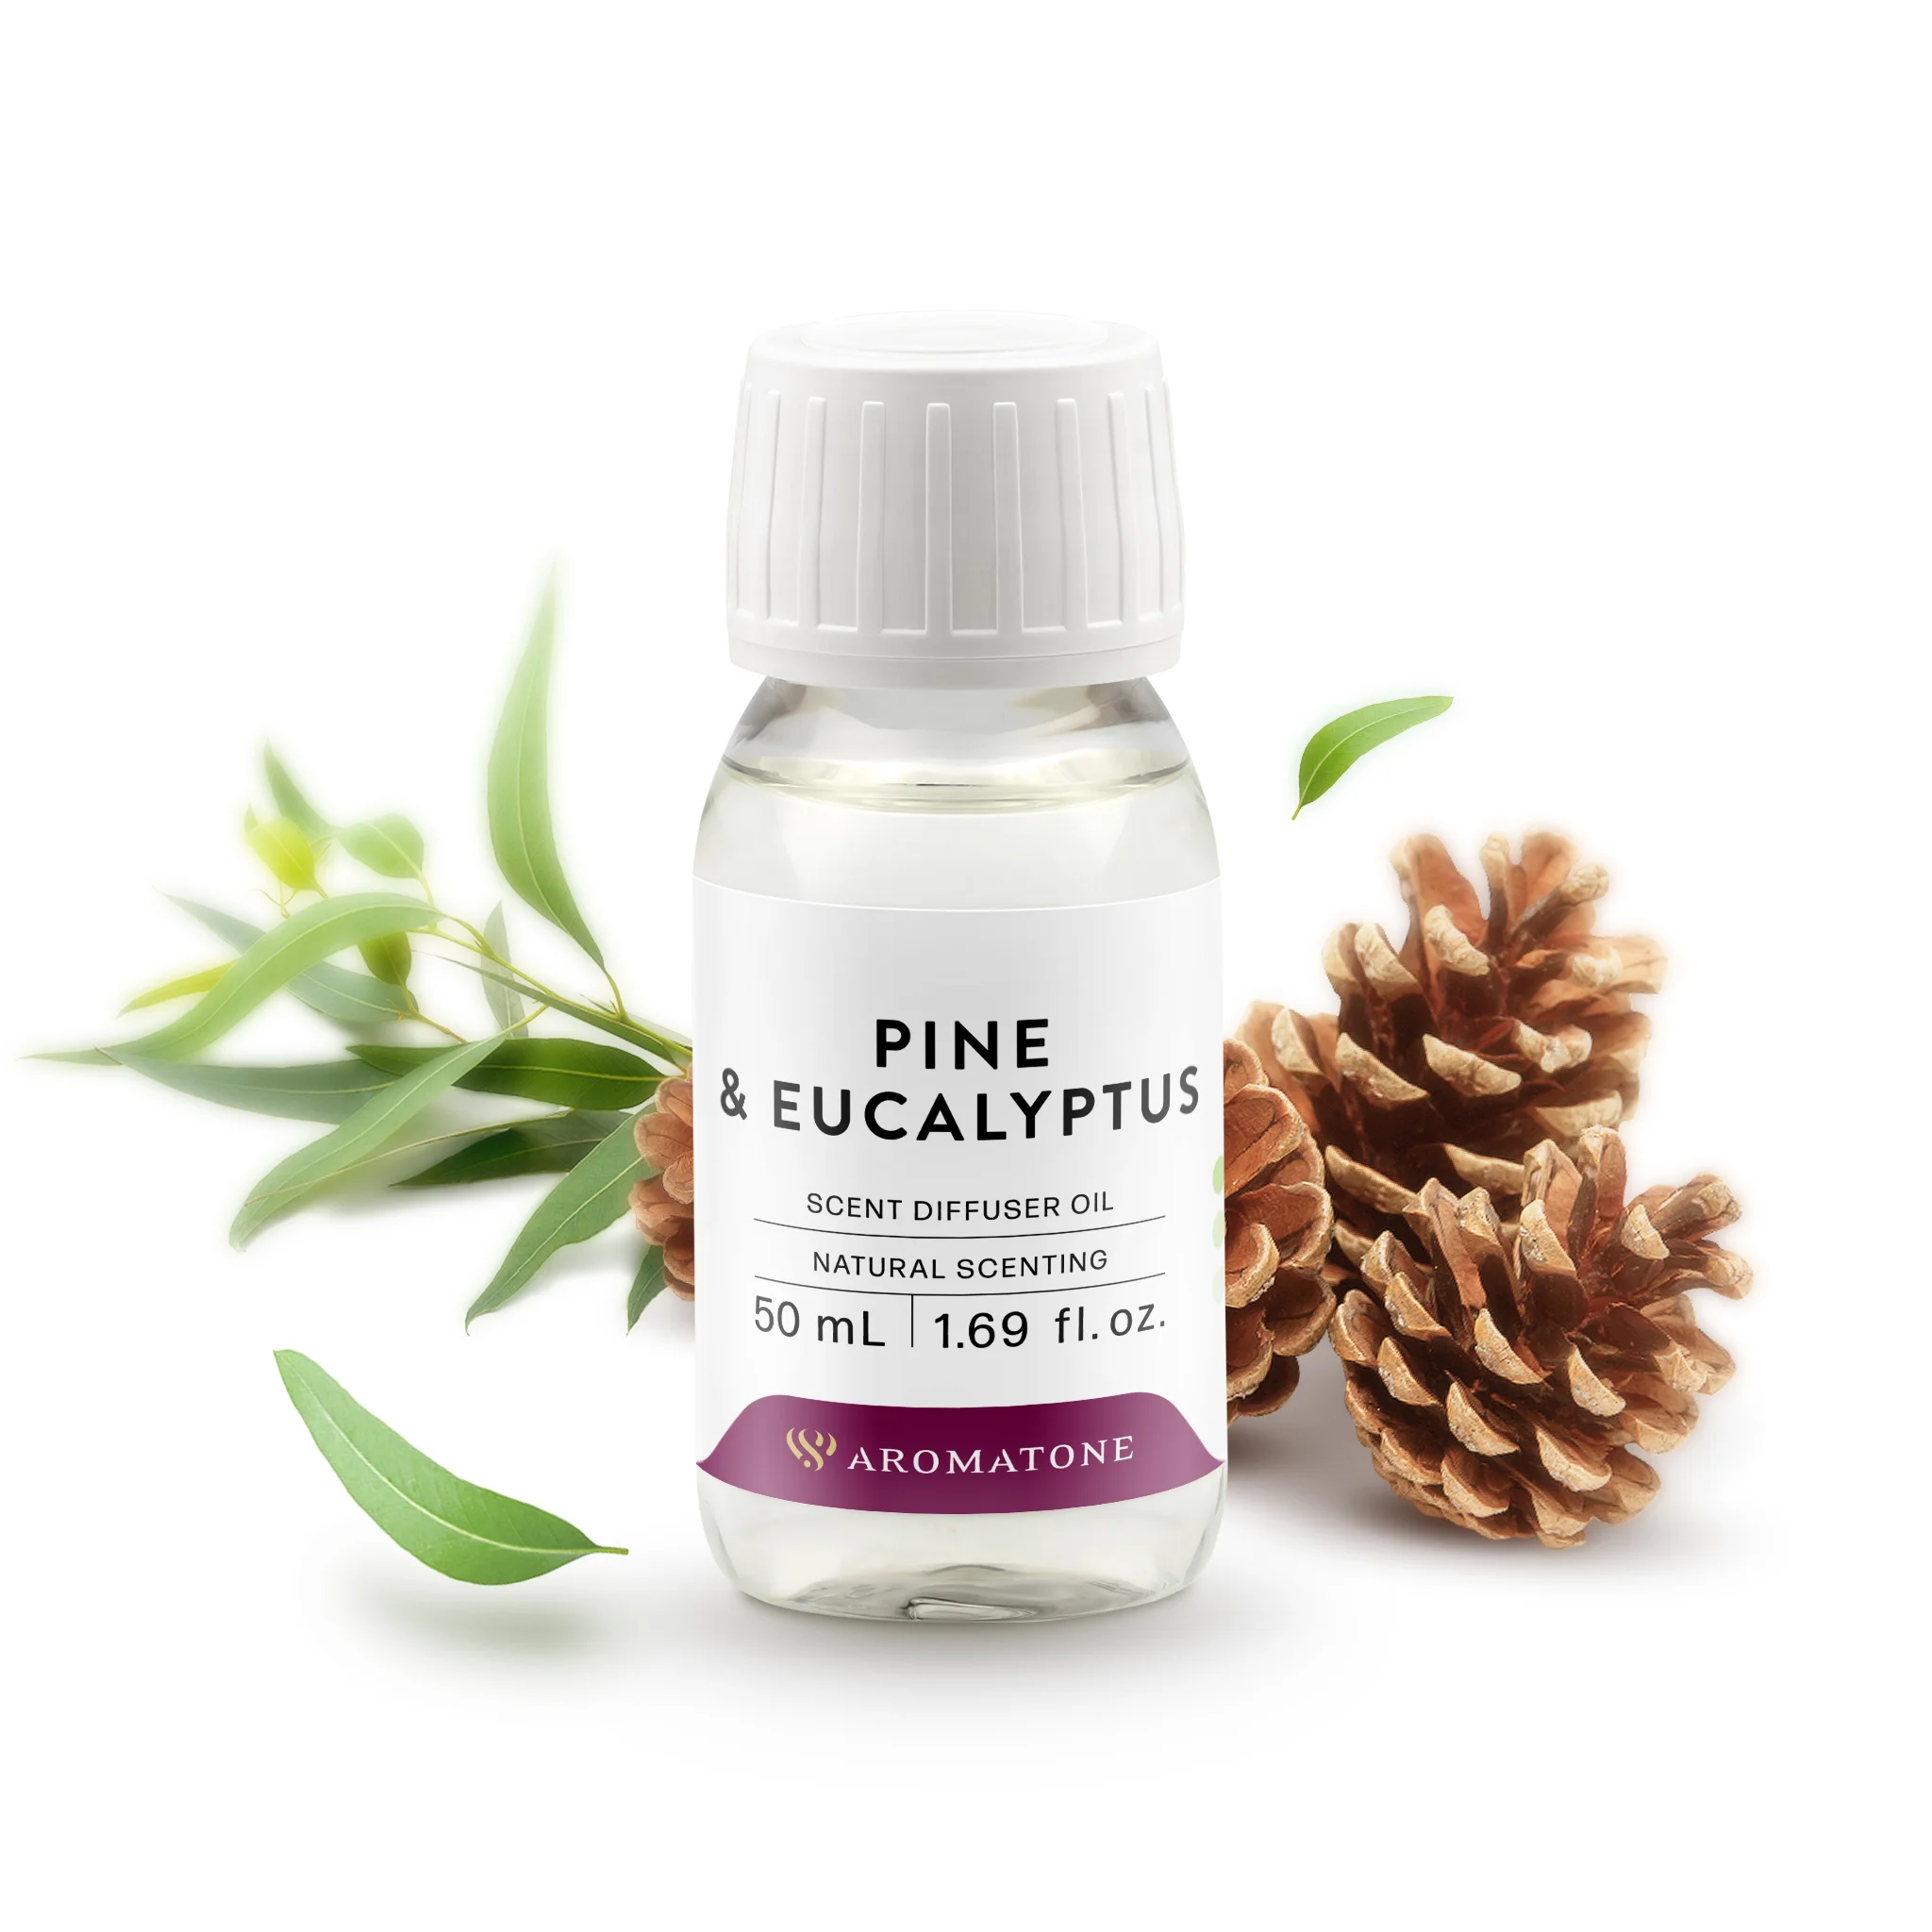 Pine & Eucalyptus essential oil